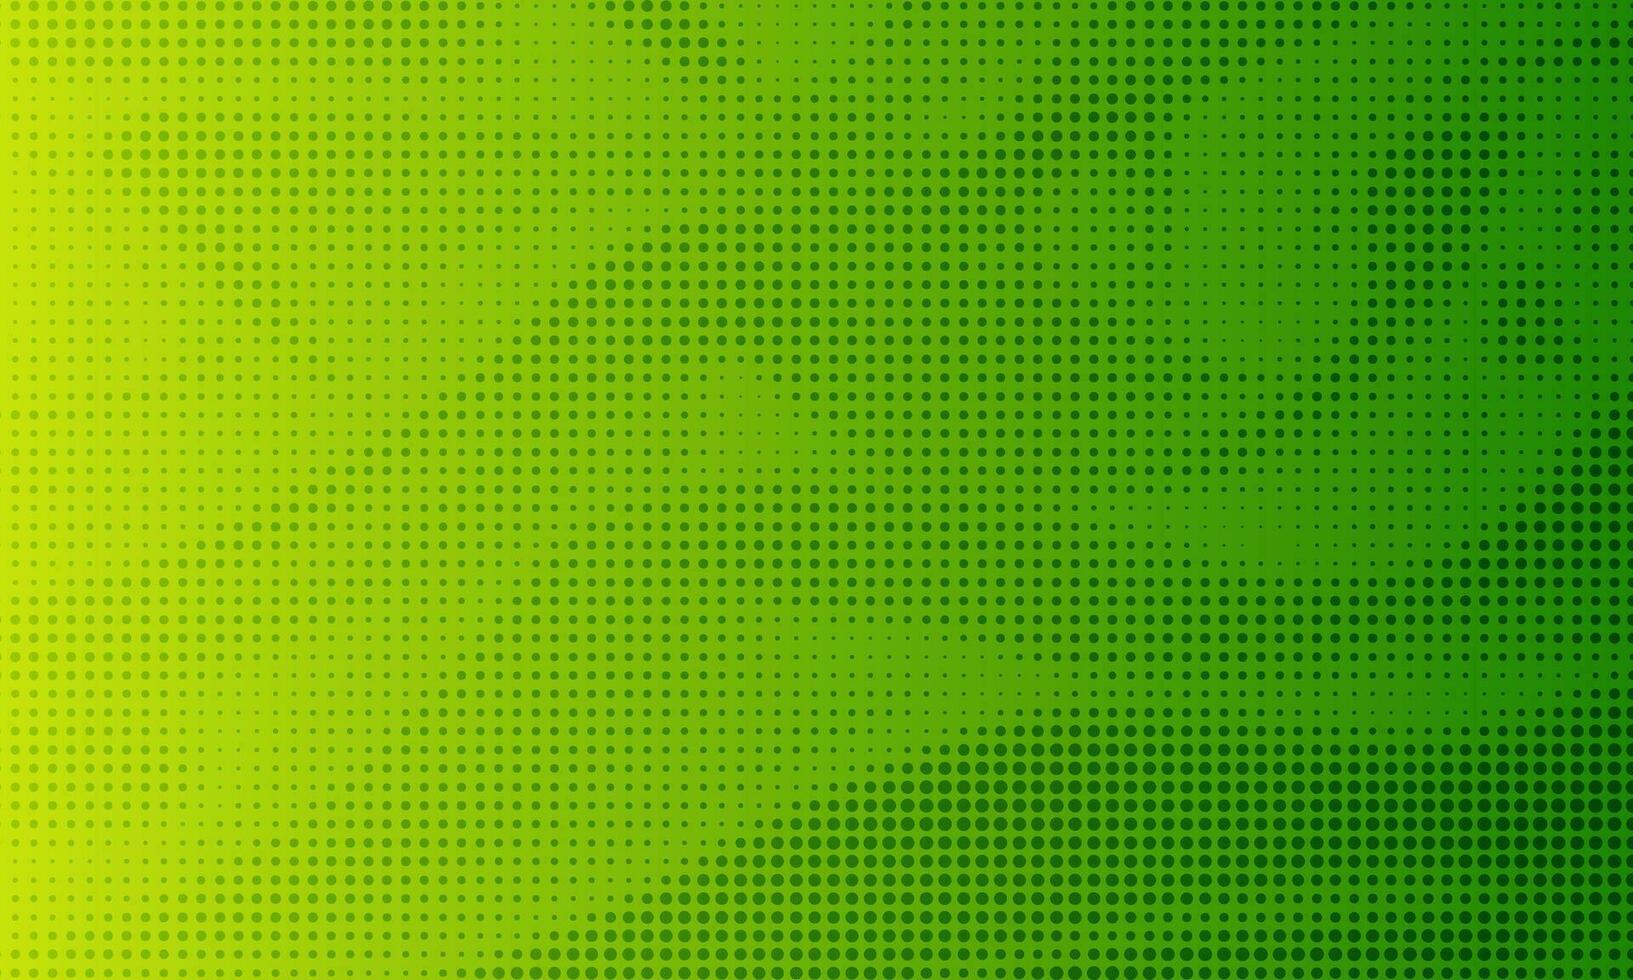 Light green vector blurred background.